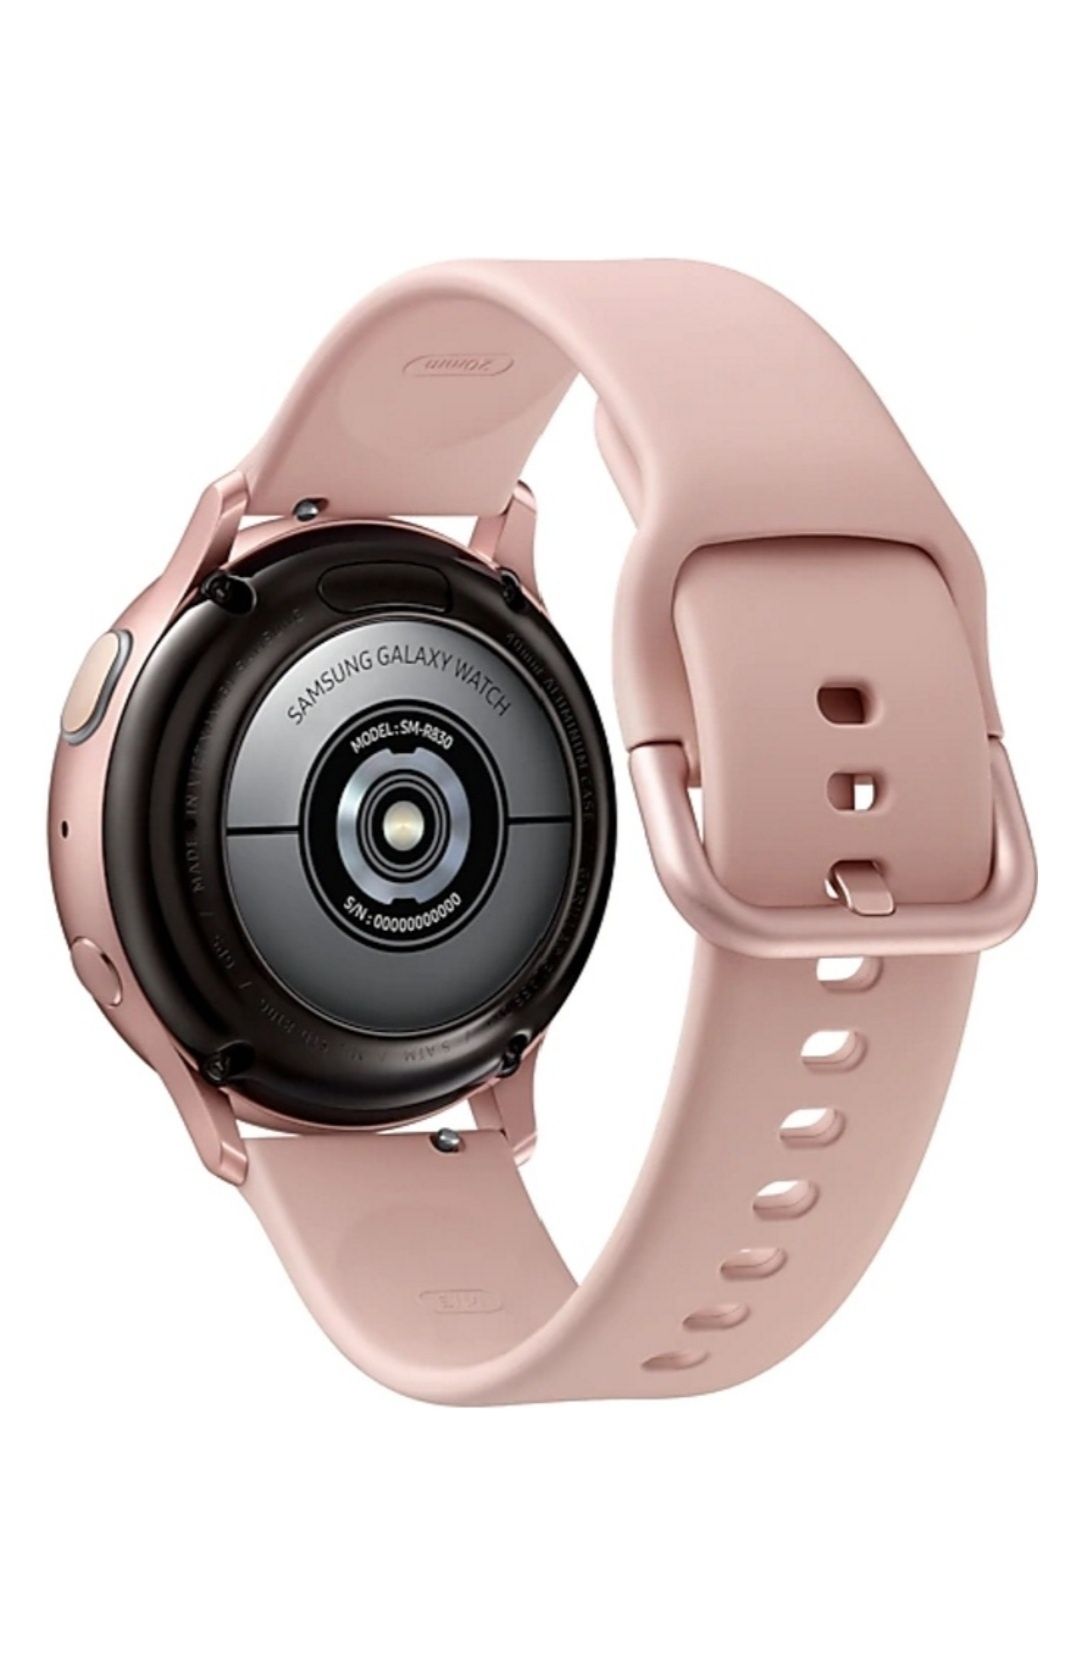 Часы смарт Samsung Galaxy Watch Activ2 40mm. Оригинал!